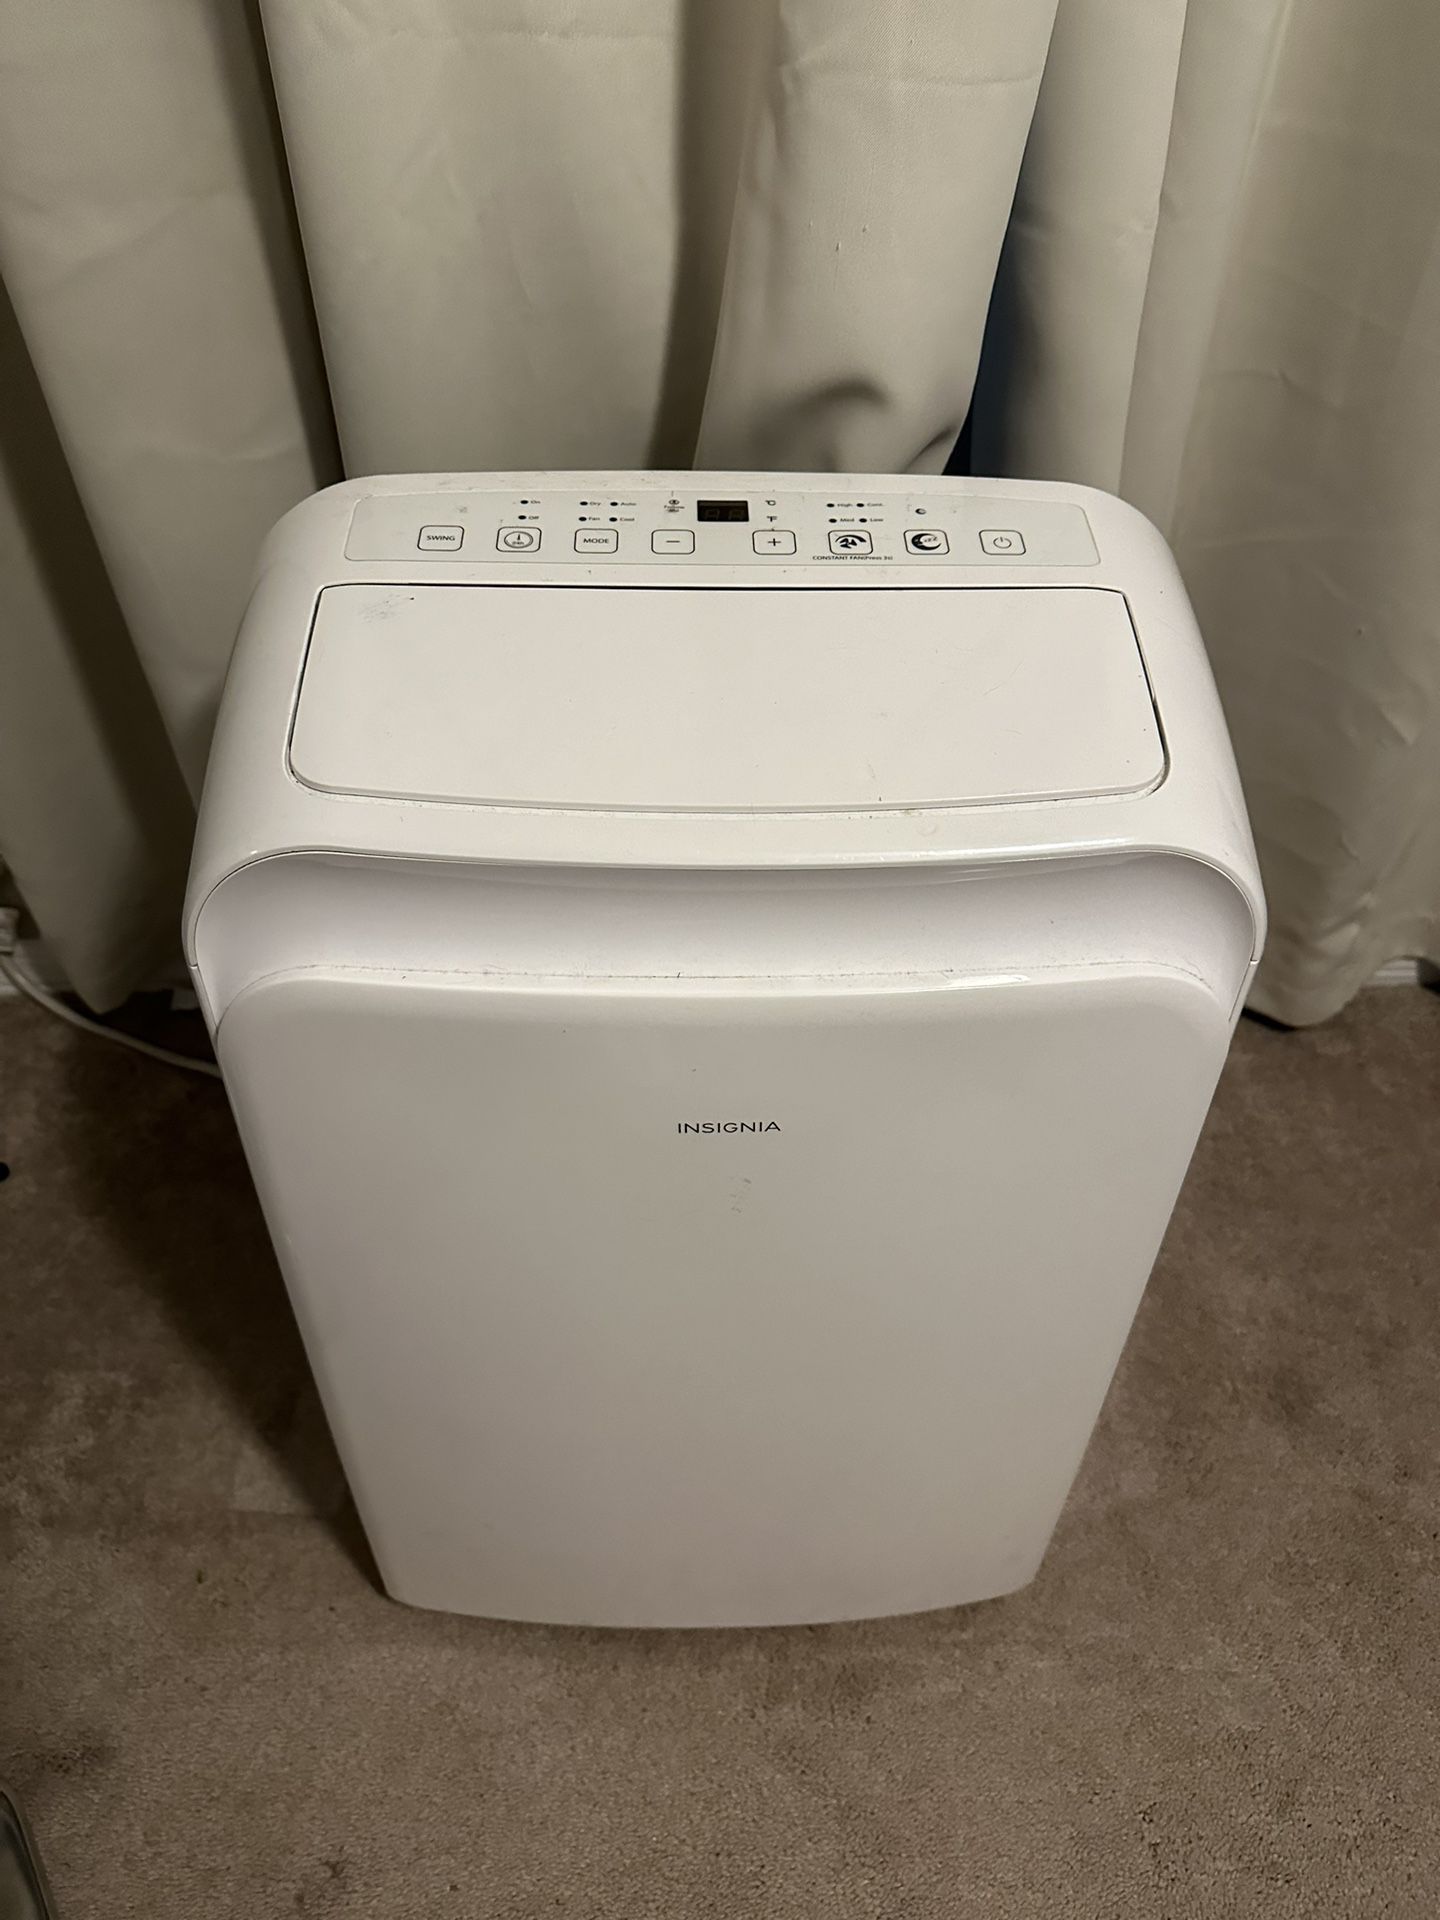 Portable A/C Unit - Air Conditioner 